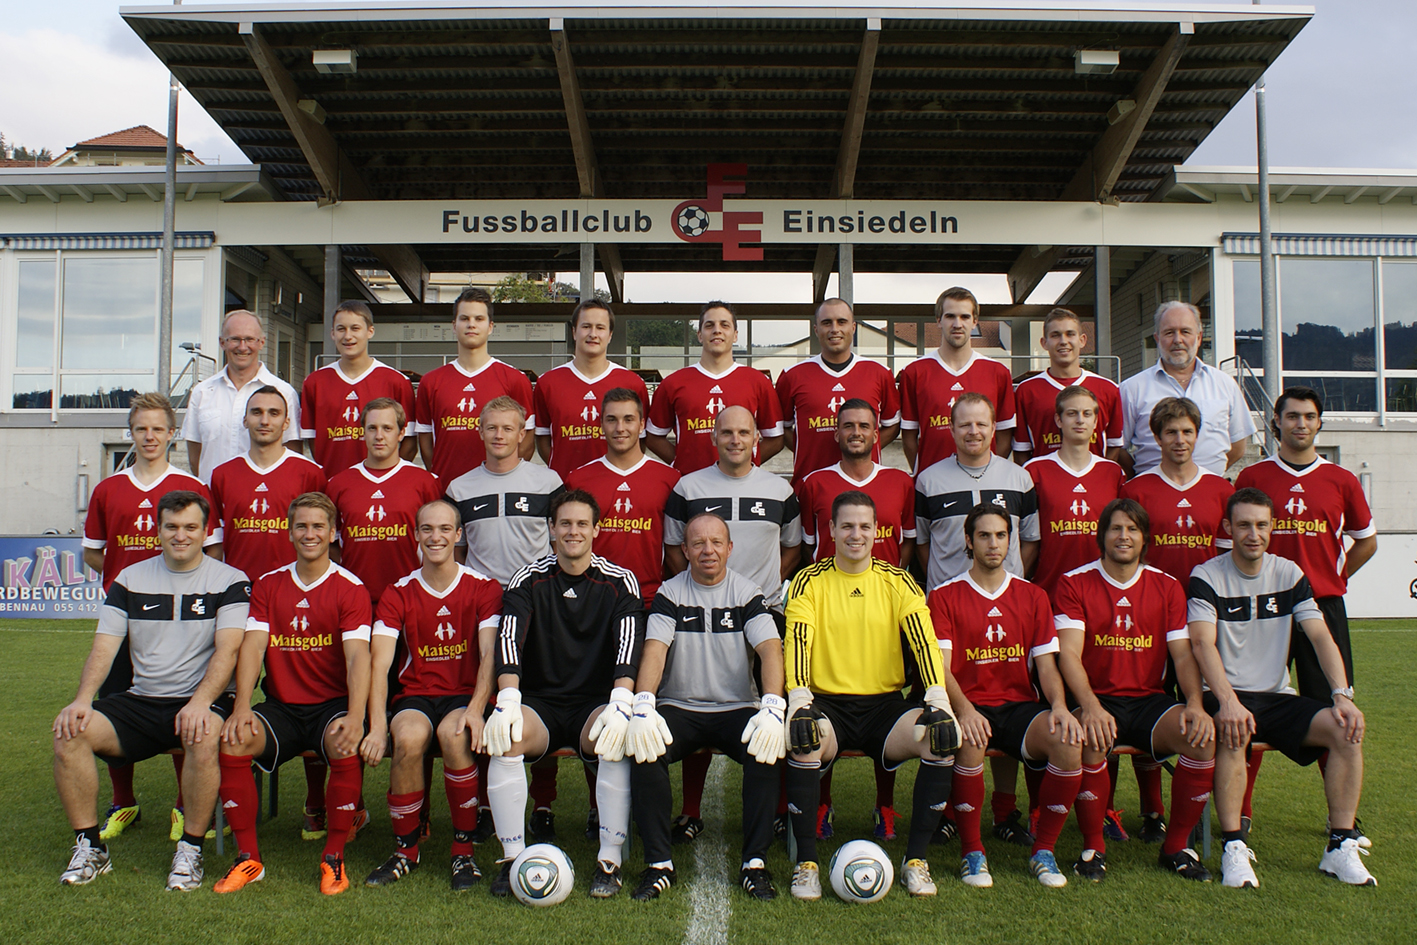 Foto: Teamfoto FC Einsiedeln 1. Mannschaft Saison 2011/2012